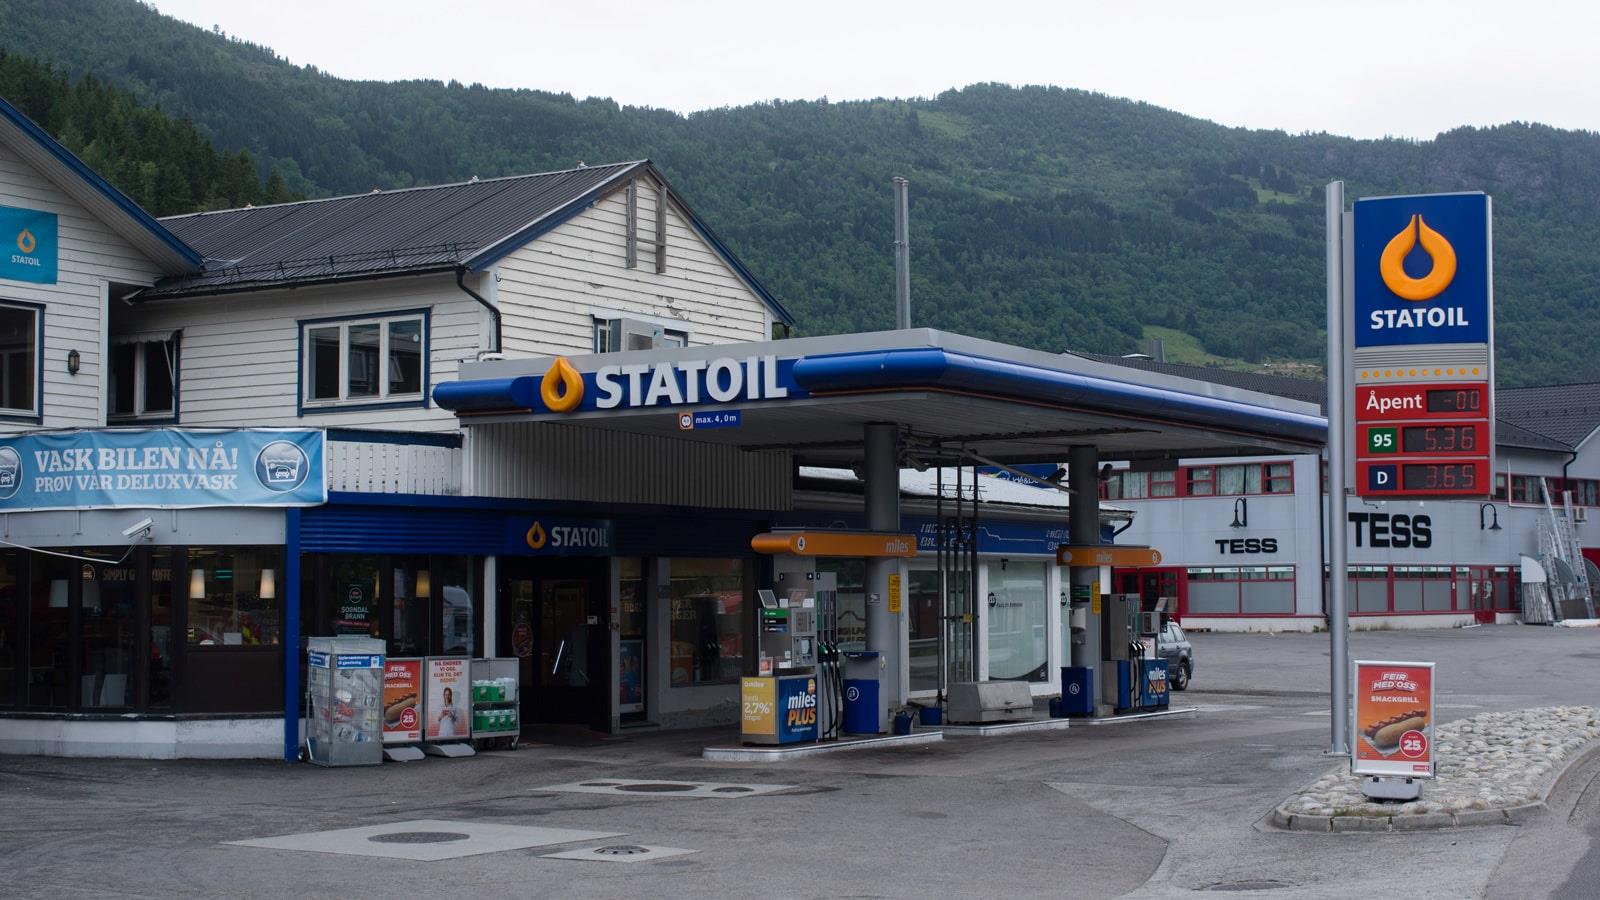 Statoil petrol station and shop